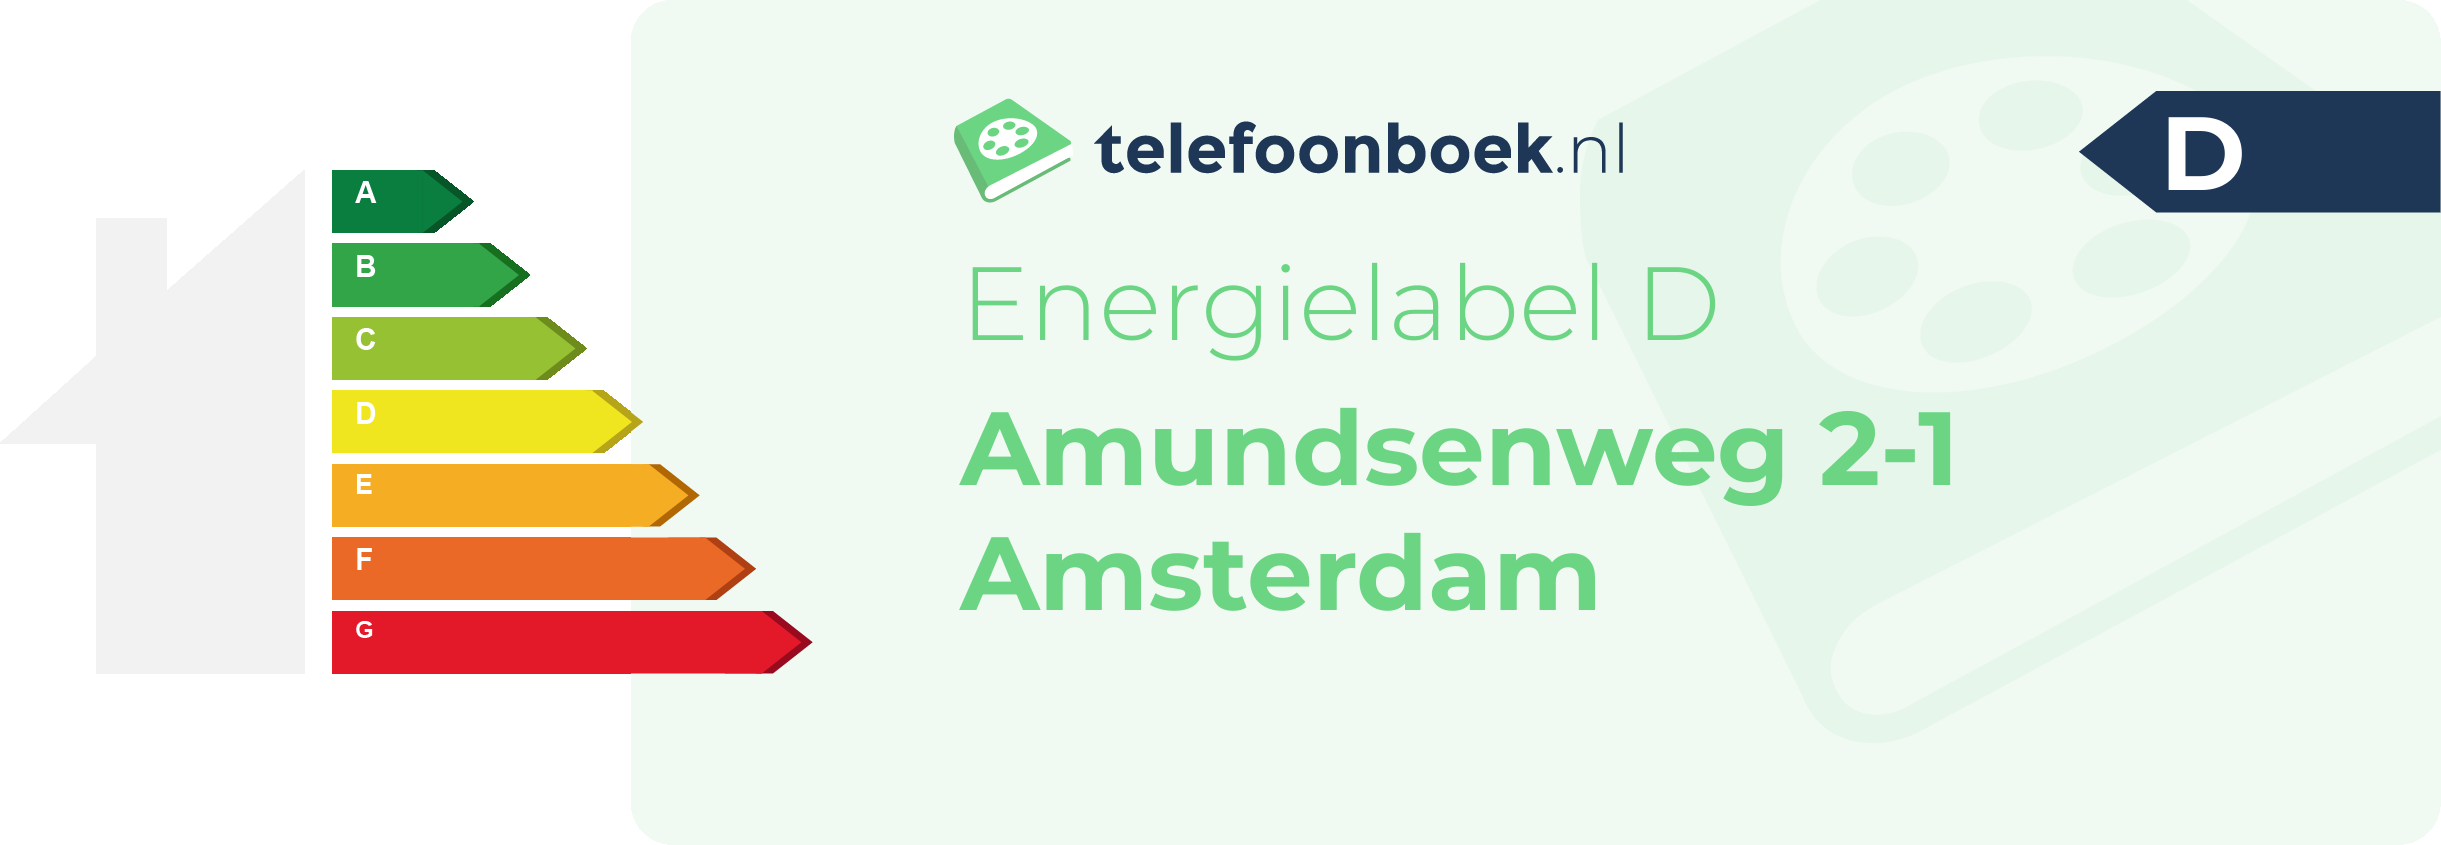 Energielabel Amundsenweg 2-1 Amsterdam